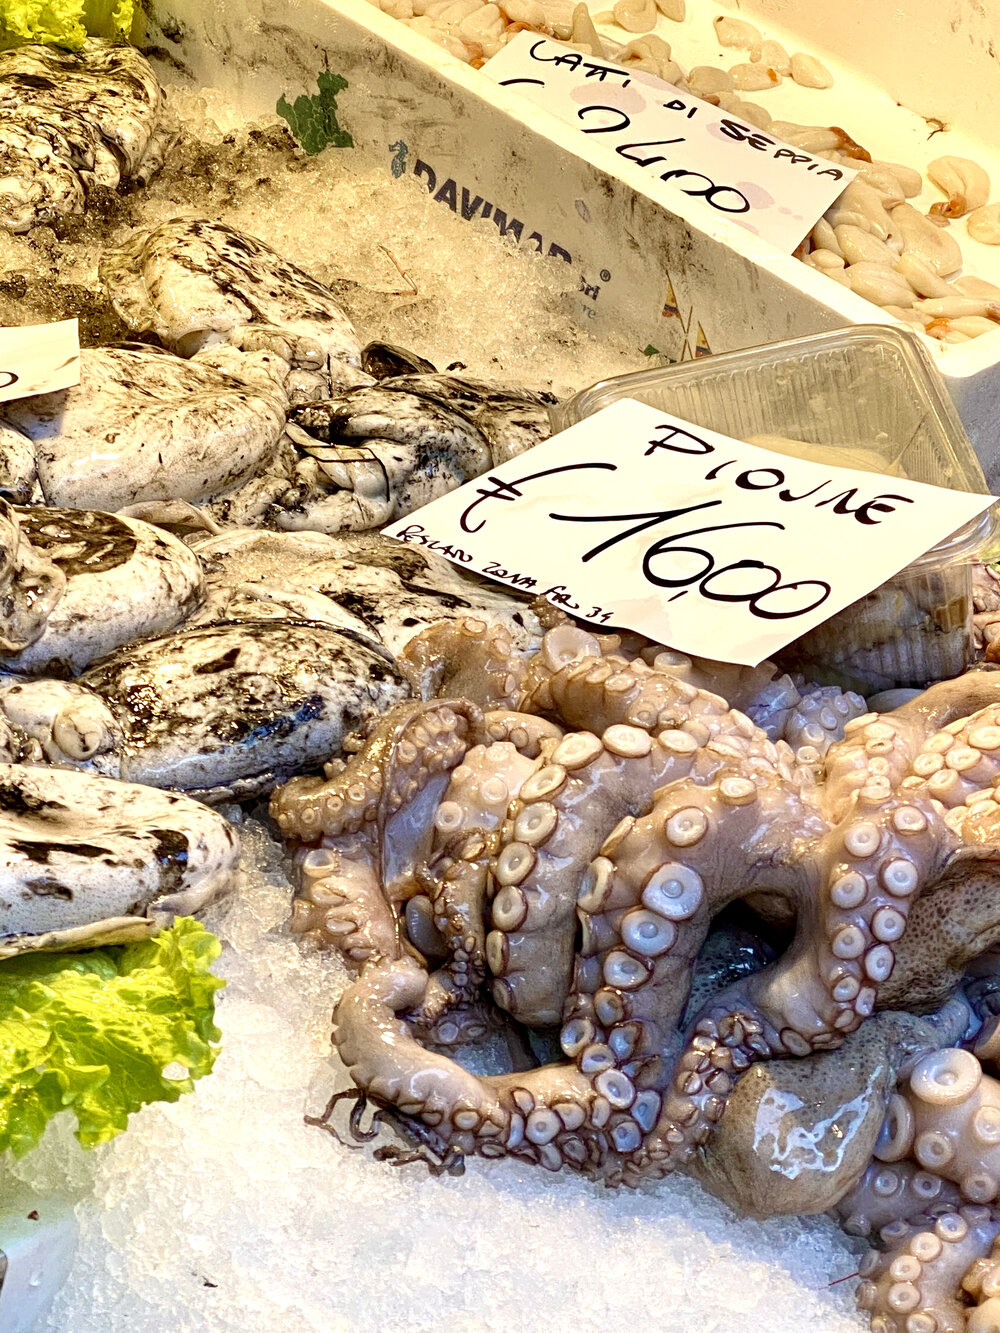 venice-rialto-market-polpo-octopus.jpeg